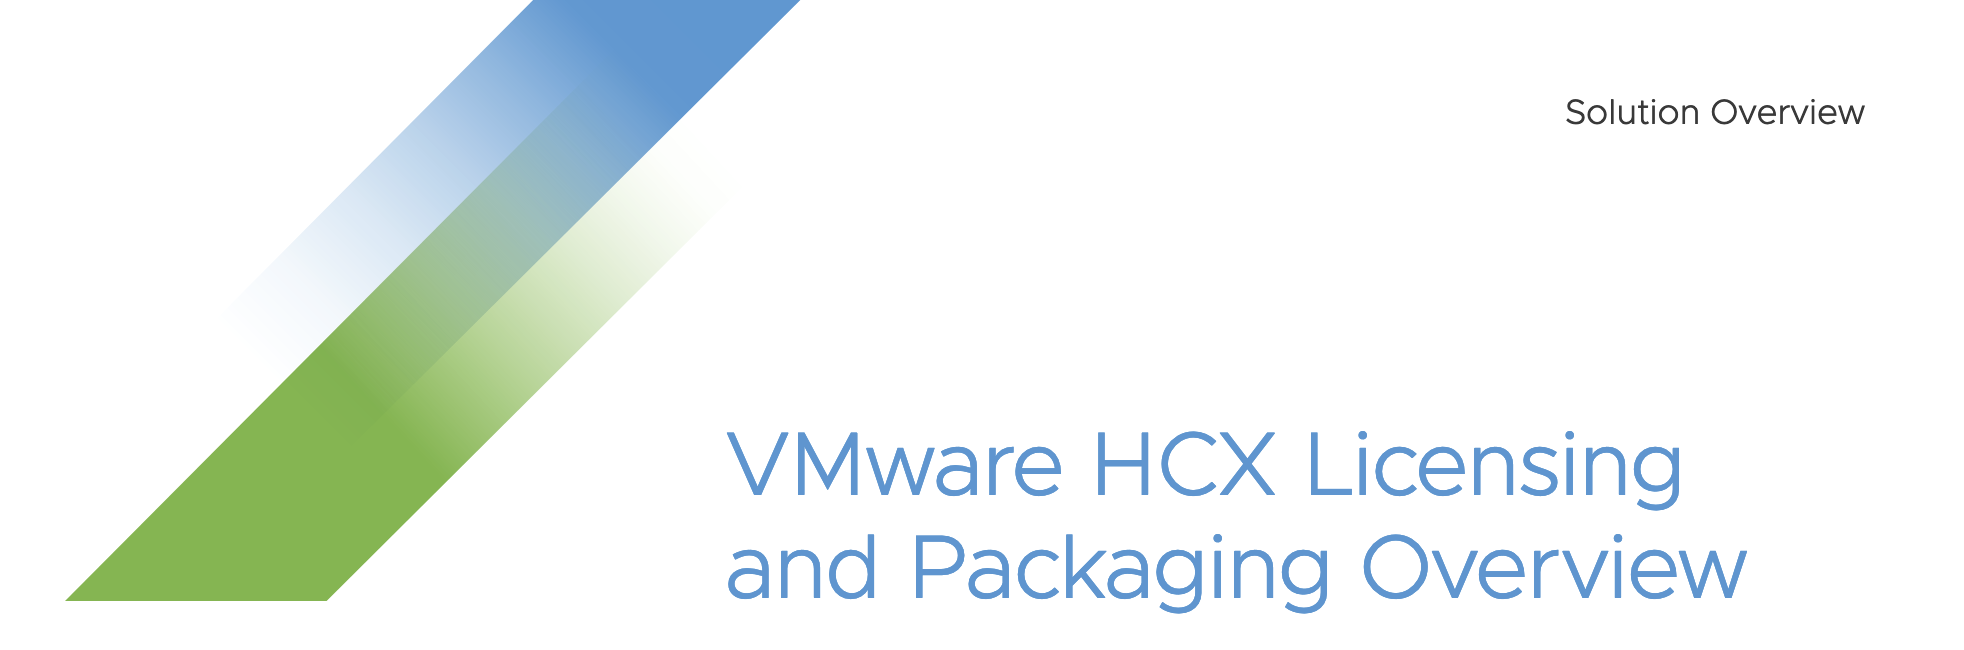 VMware HCX Logo